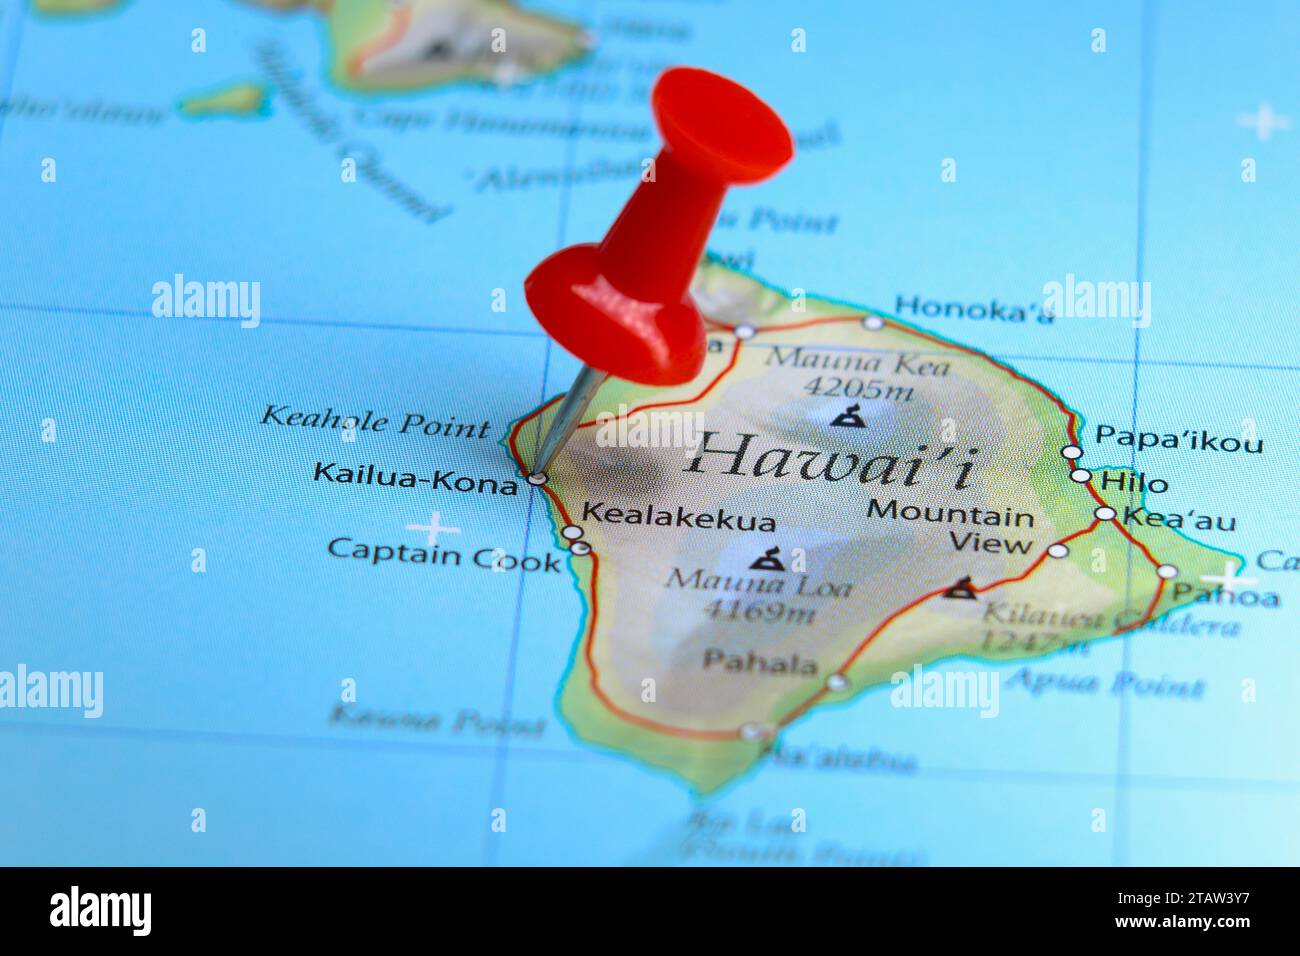 Kailua Kona, Hawaii pin on map Stock Photo